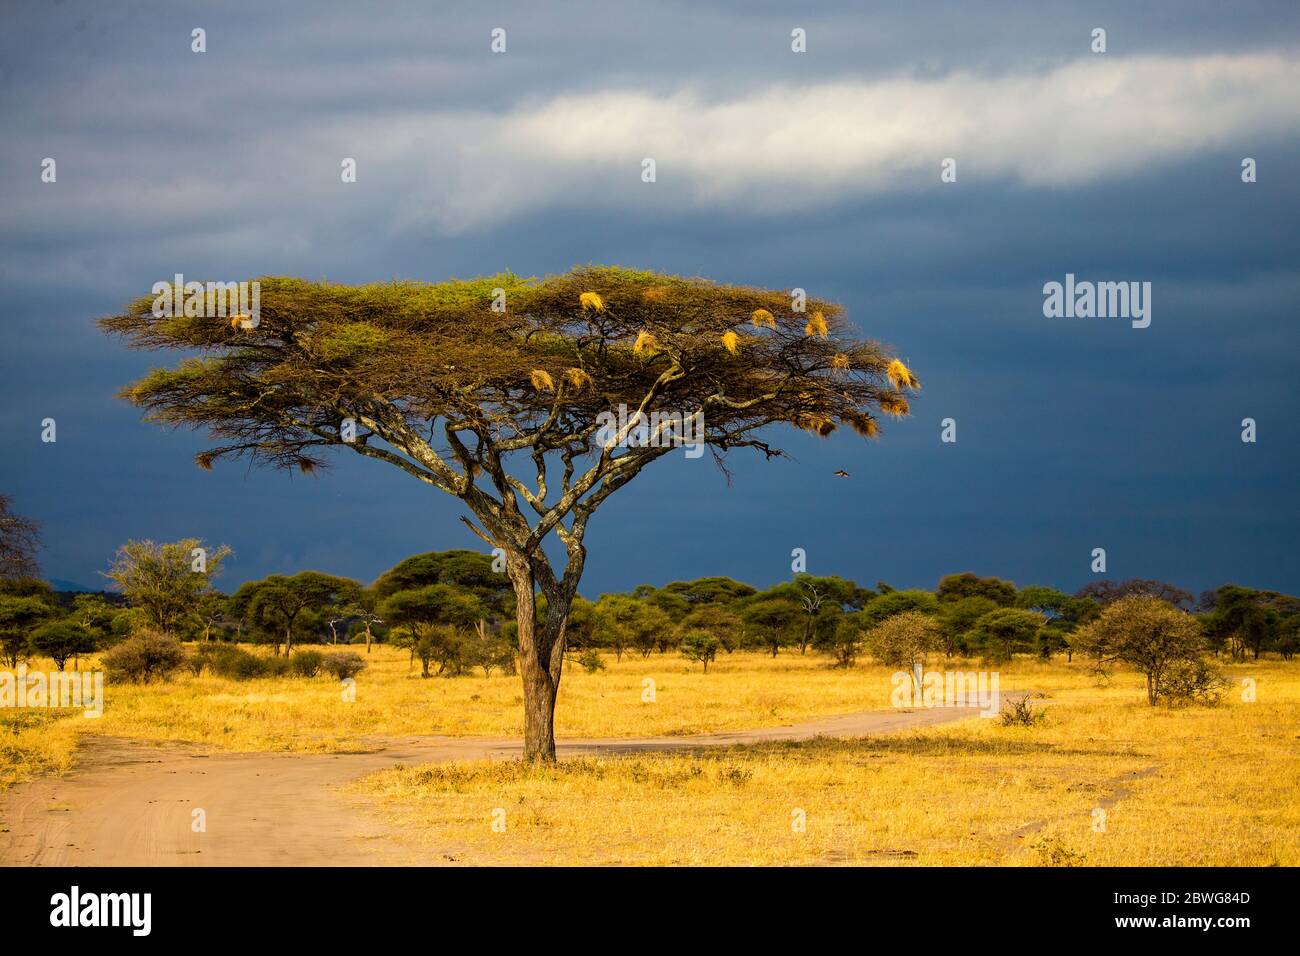 Savannah landscape before storm with umbrella thorn tree (Acacia tortilis Subspecies heteracantha) in foreground, Tarangire National Park, Tanzania, Africa Stock Photo